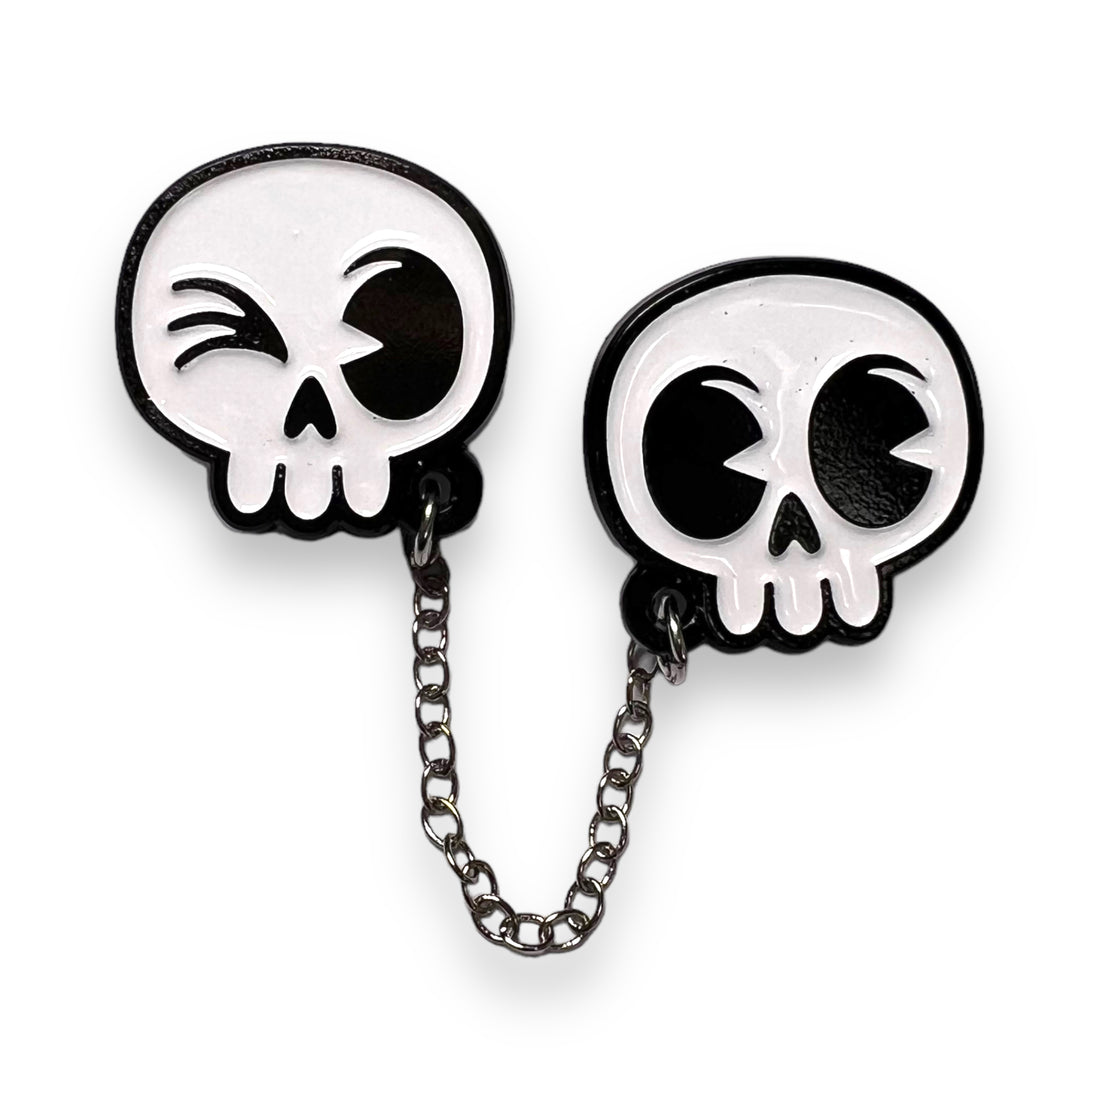 Skull Buddies Pin Chain Set